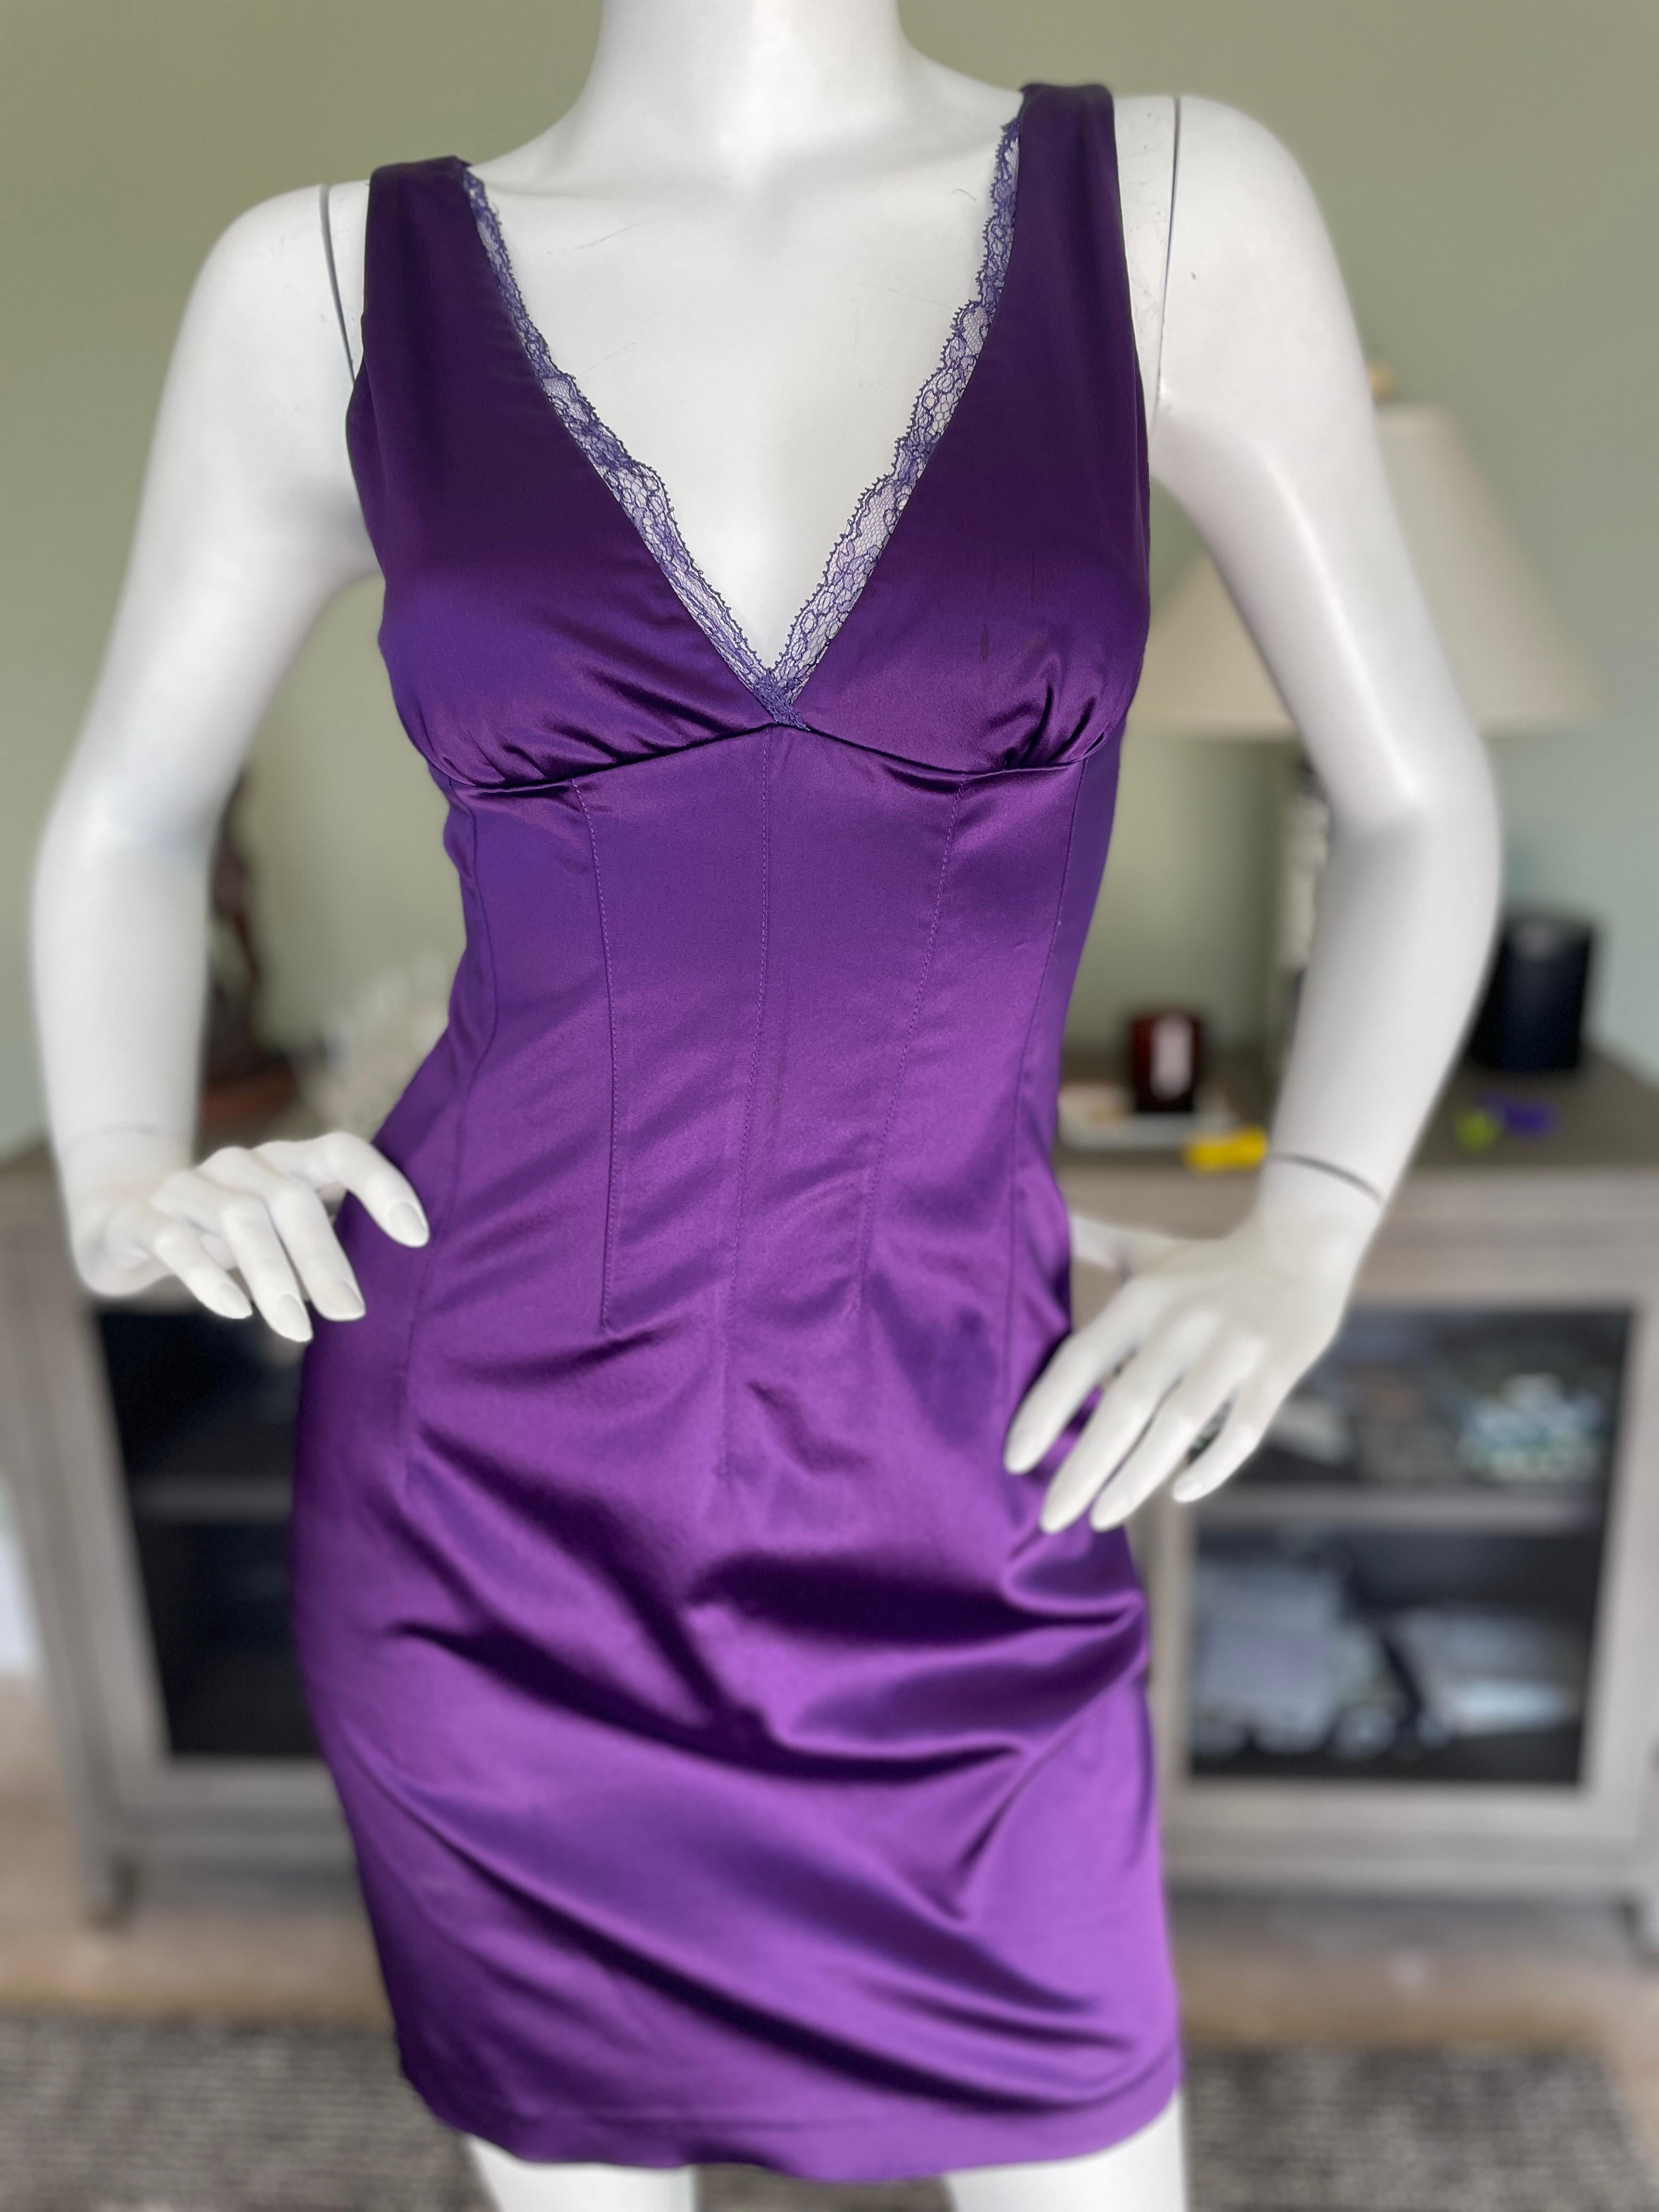 D&G Dolce & Gabbana Purple Lace Trim Cocktail Dress 
Size 42, but runs small.
Bust 32